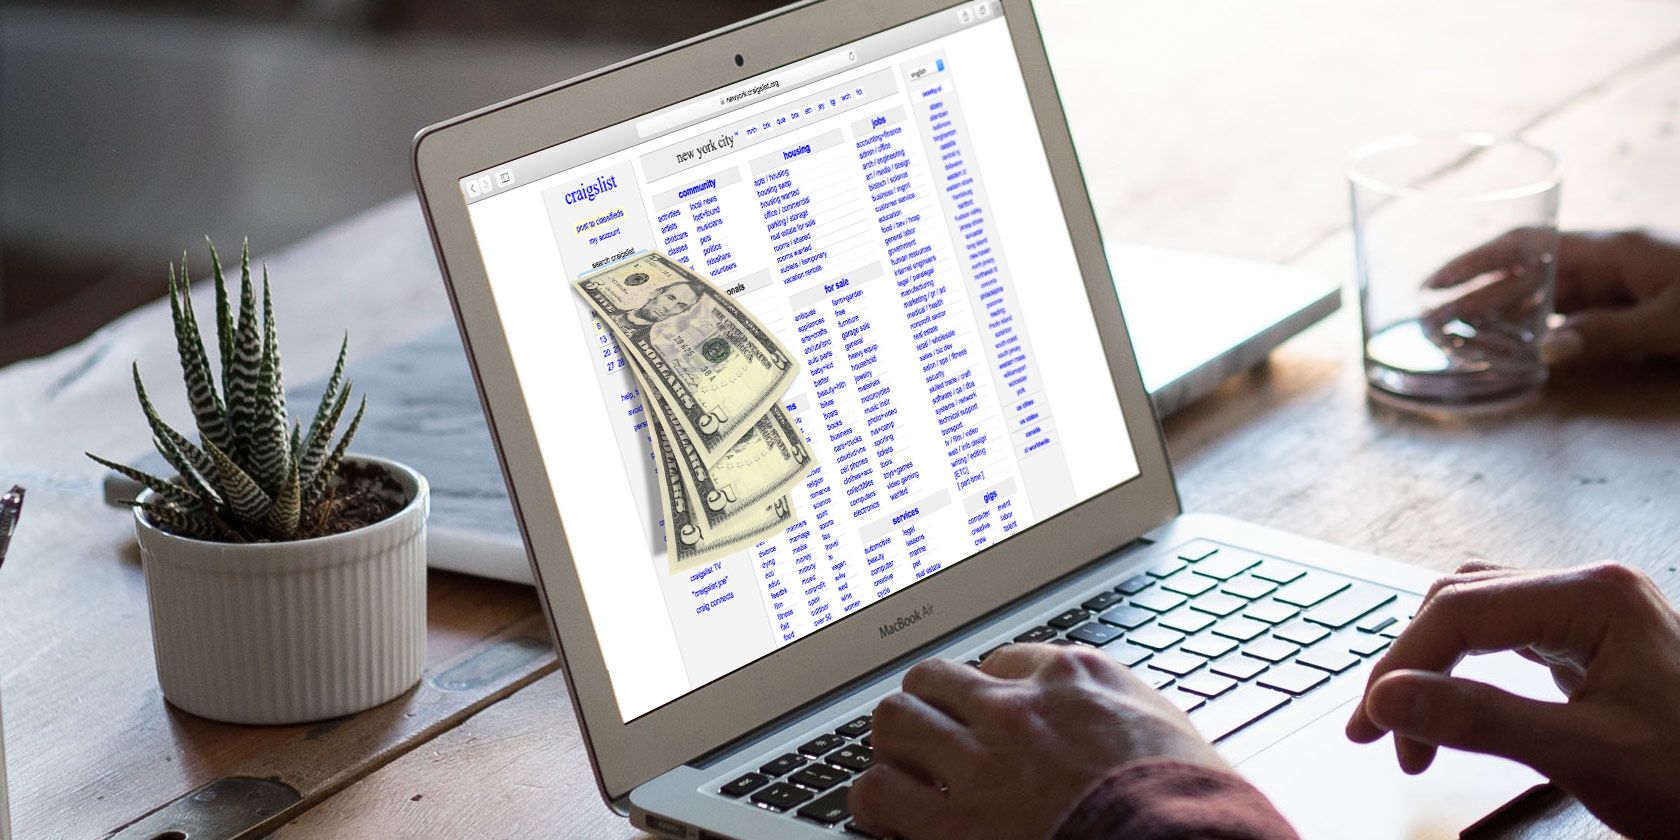 15 Ways You Can Use Craigslist to Make Money | MakeUseOf